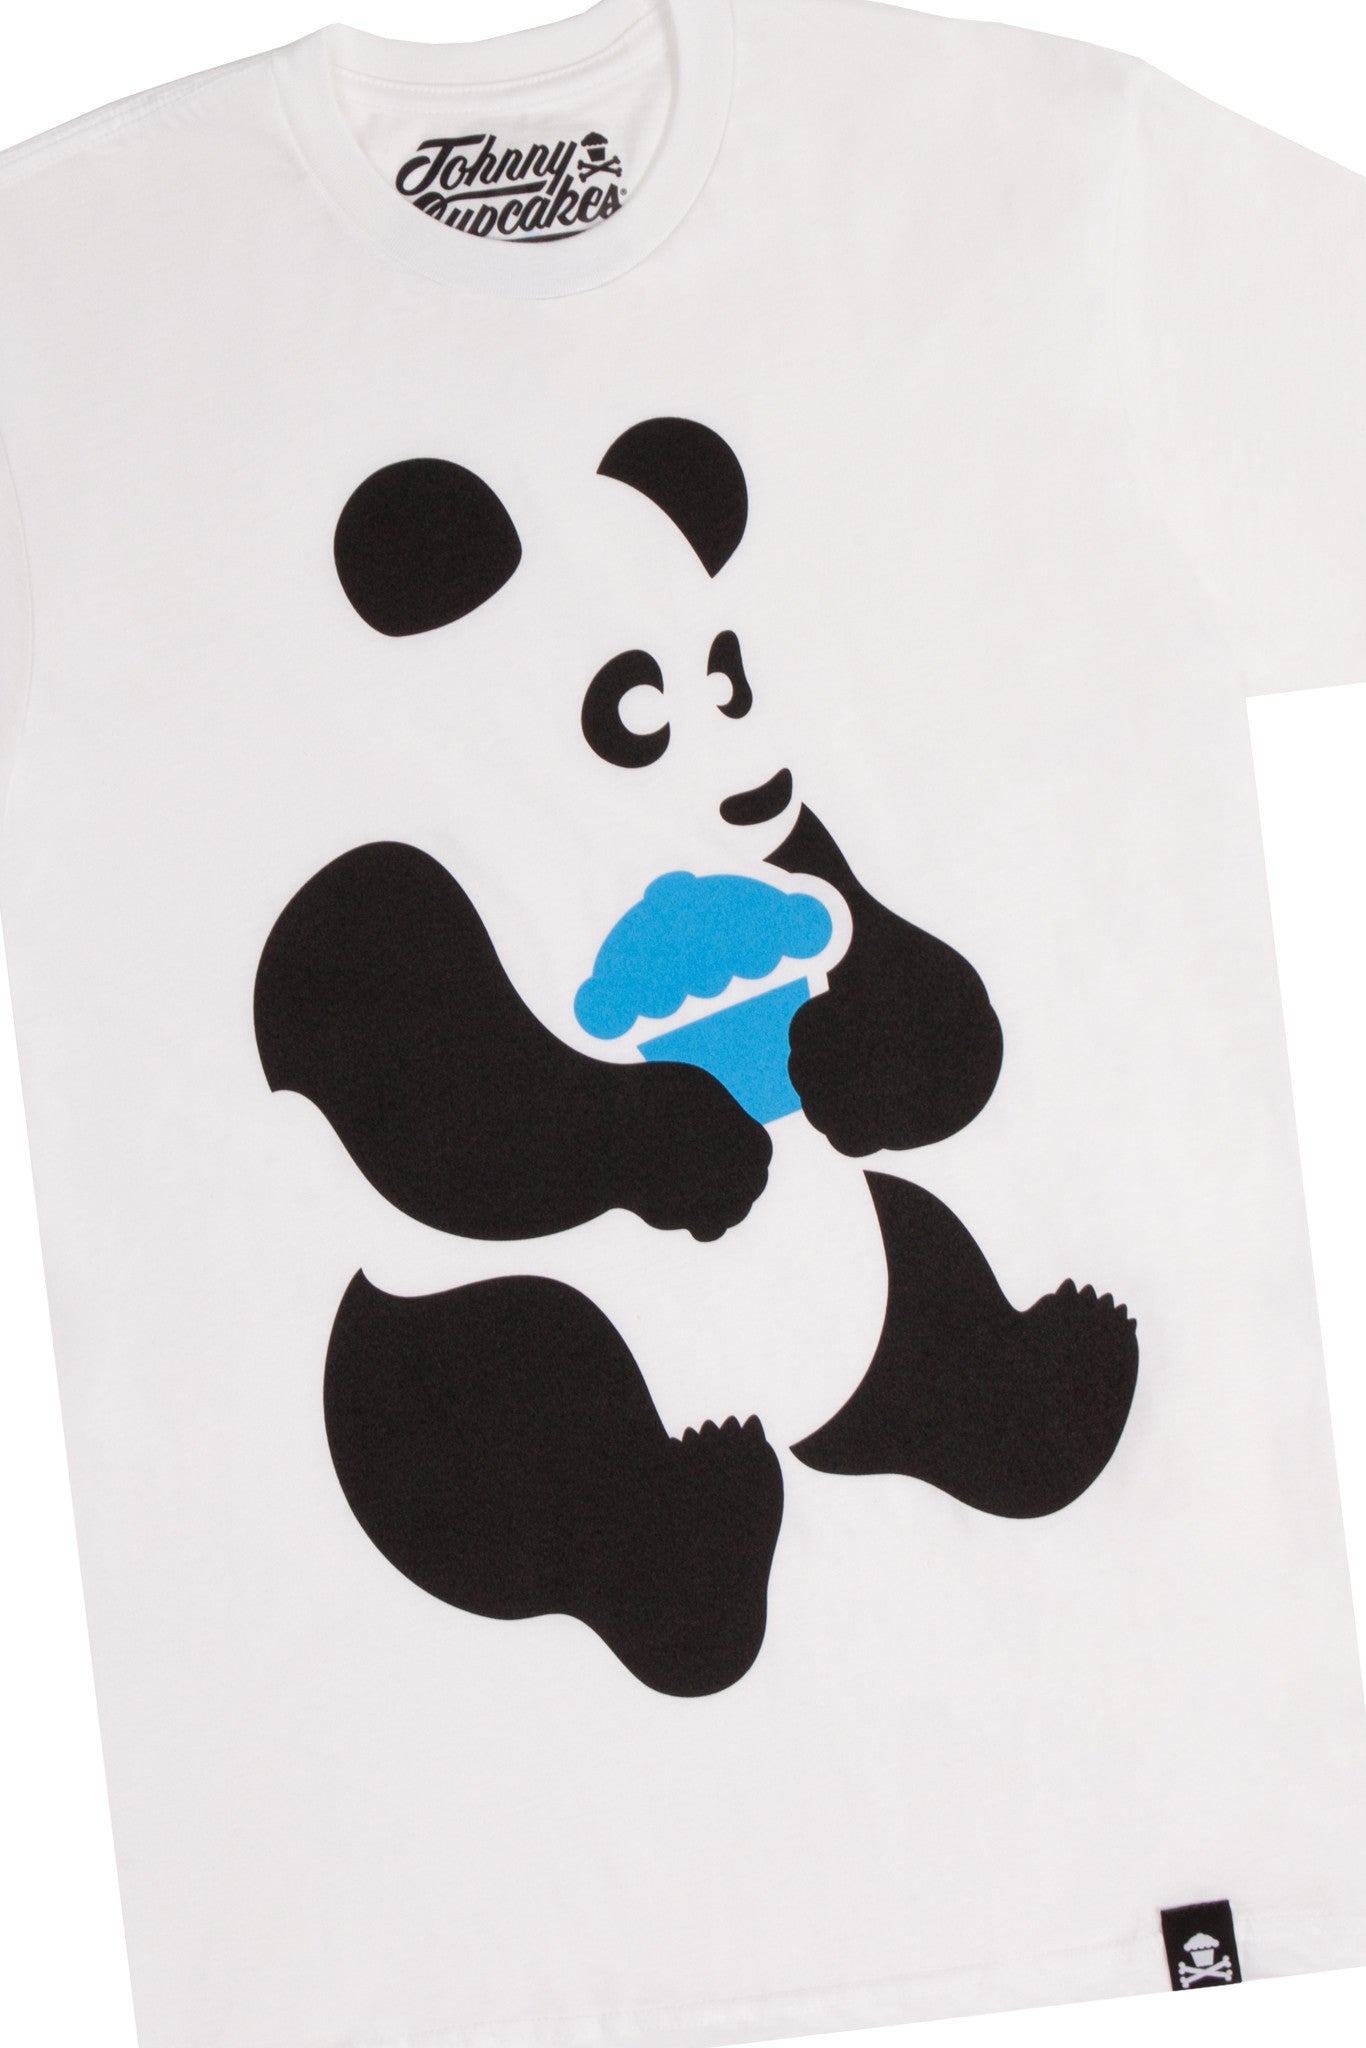 JC Vault - Adult Medium - Panda (Blue)